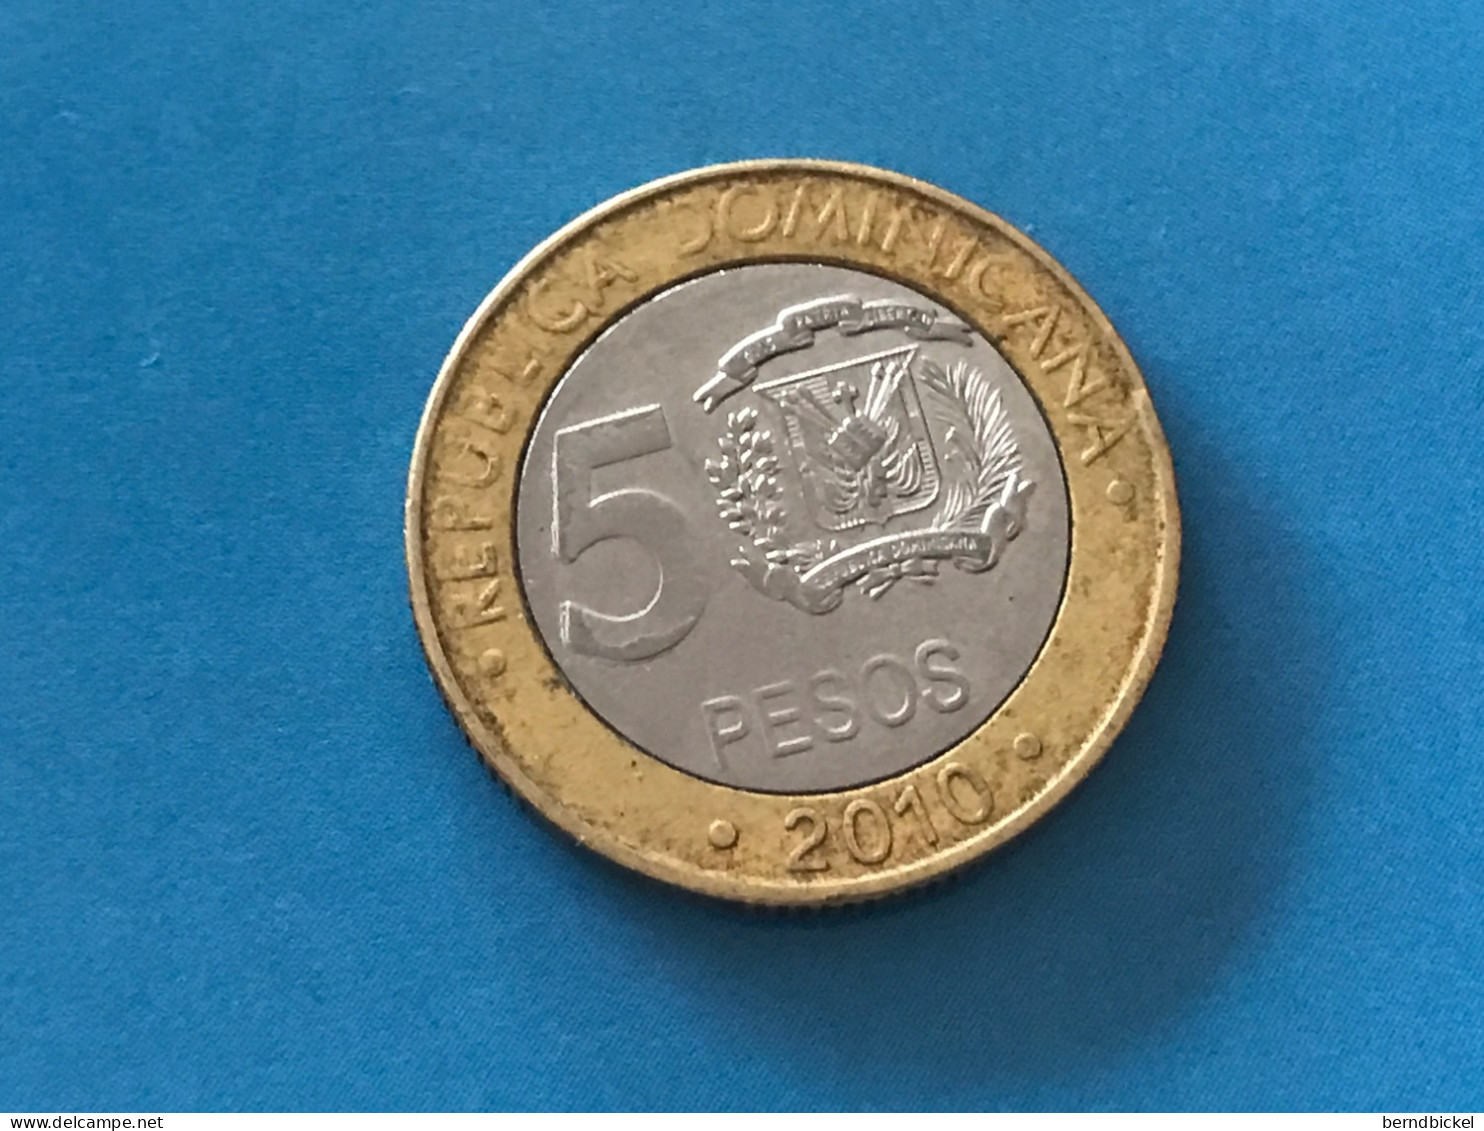 Münze Münzen Umlaufmünze Dominikanische Republik 5 Pesos 2010 - Dominicana